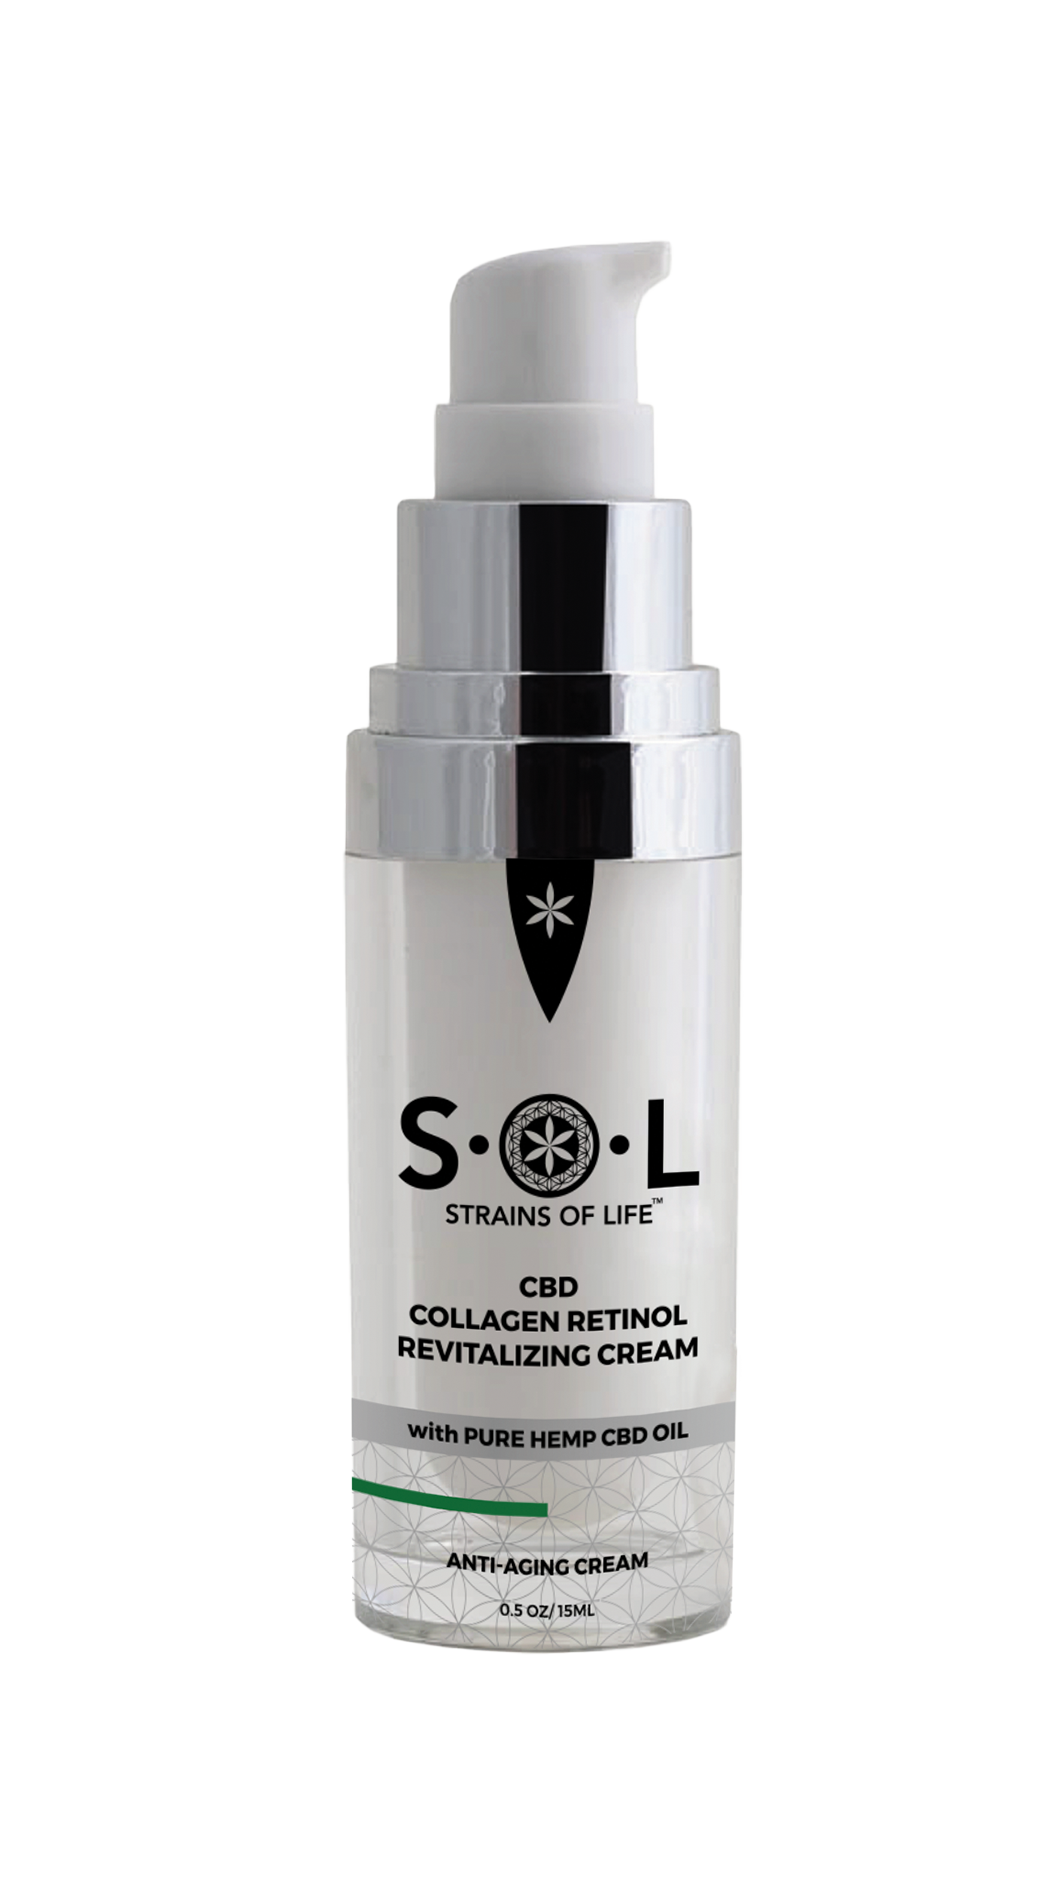 Retinol Eye Cream fro SOL CBD. Hemp infused CBD revitalizing eye cream. CBD skincare products.